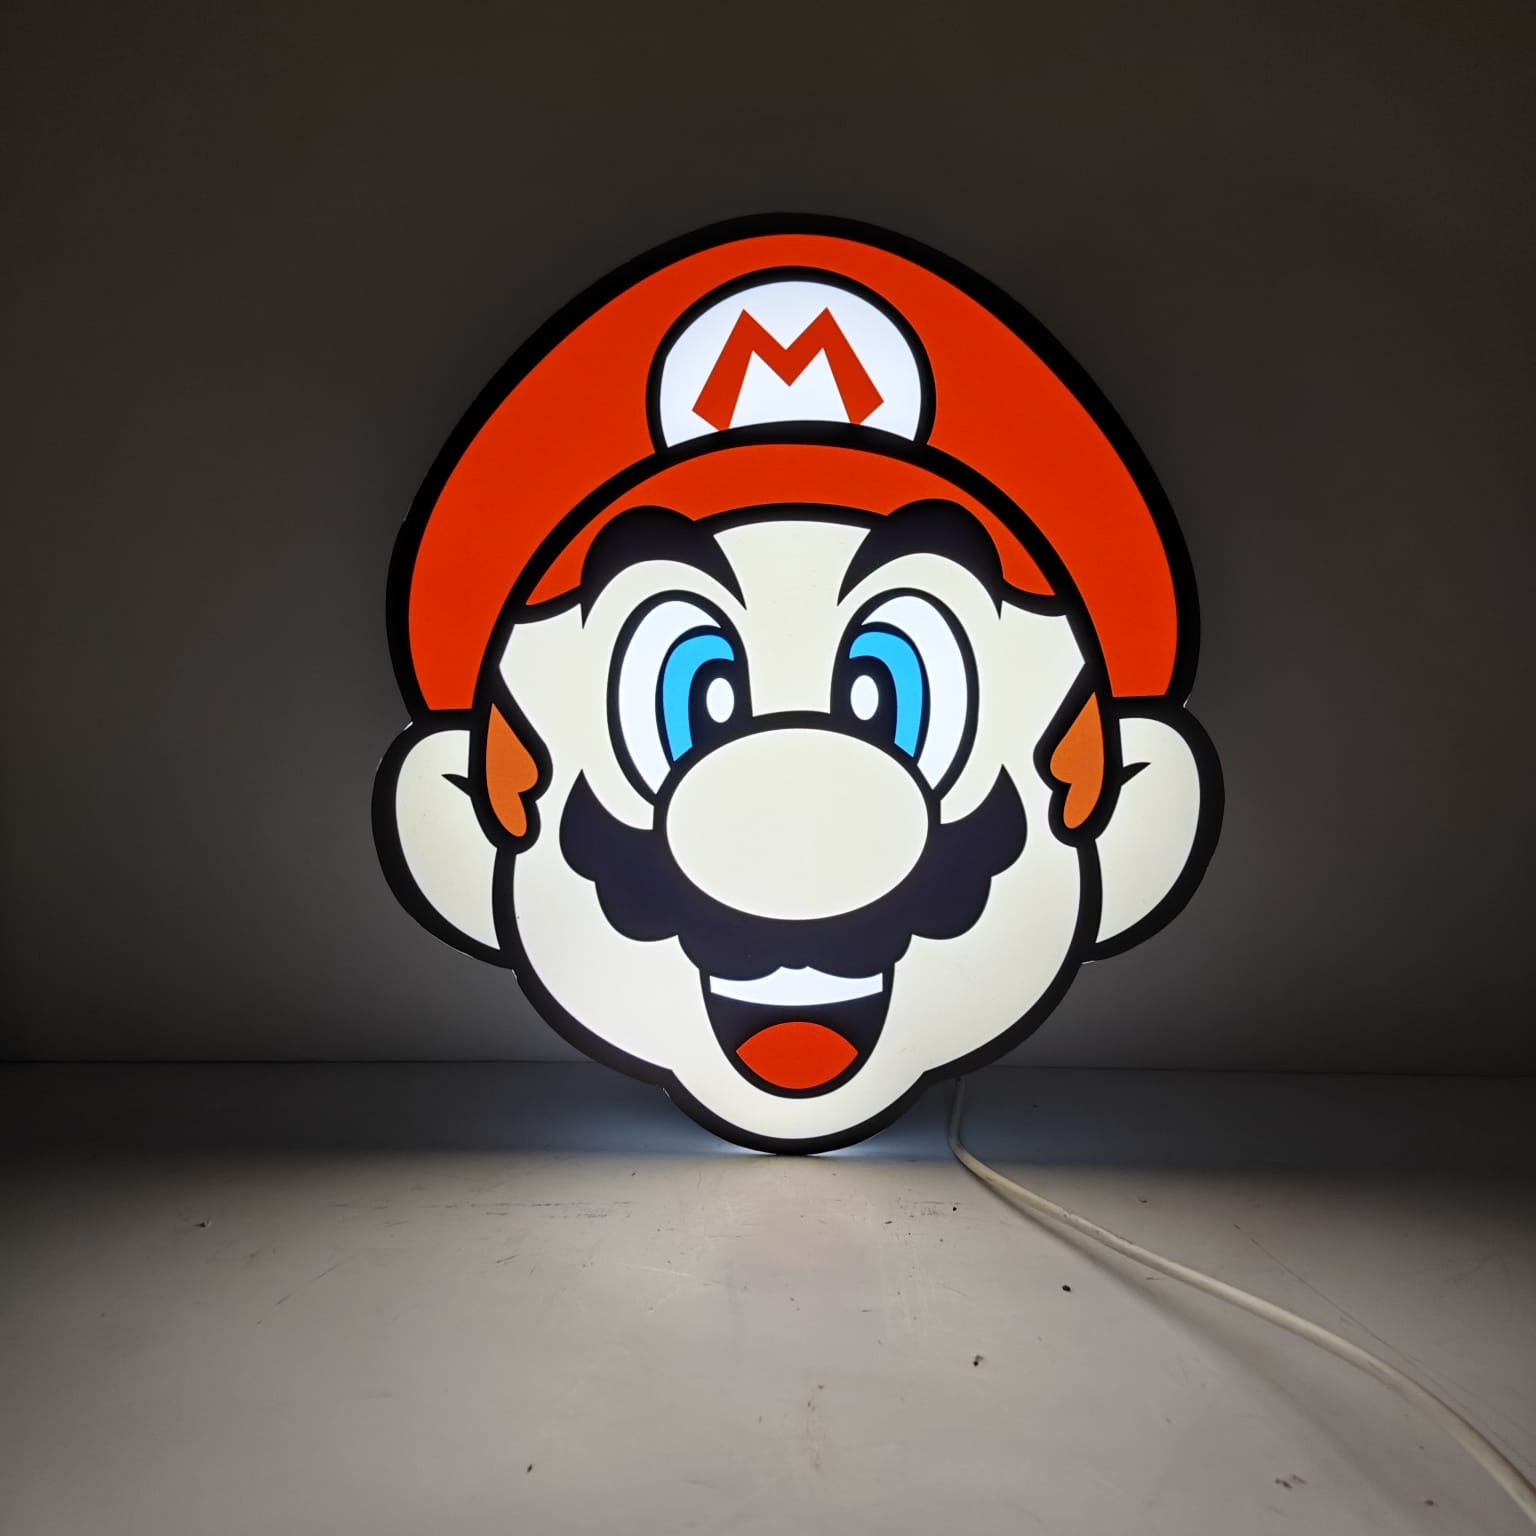 Lampe avec sonorité Nintendo Super Mario Boo - Veilleuses - Achat & prix